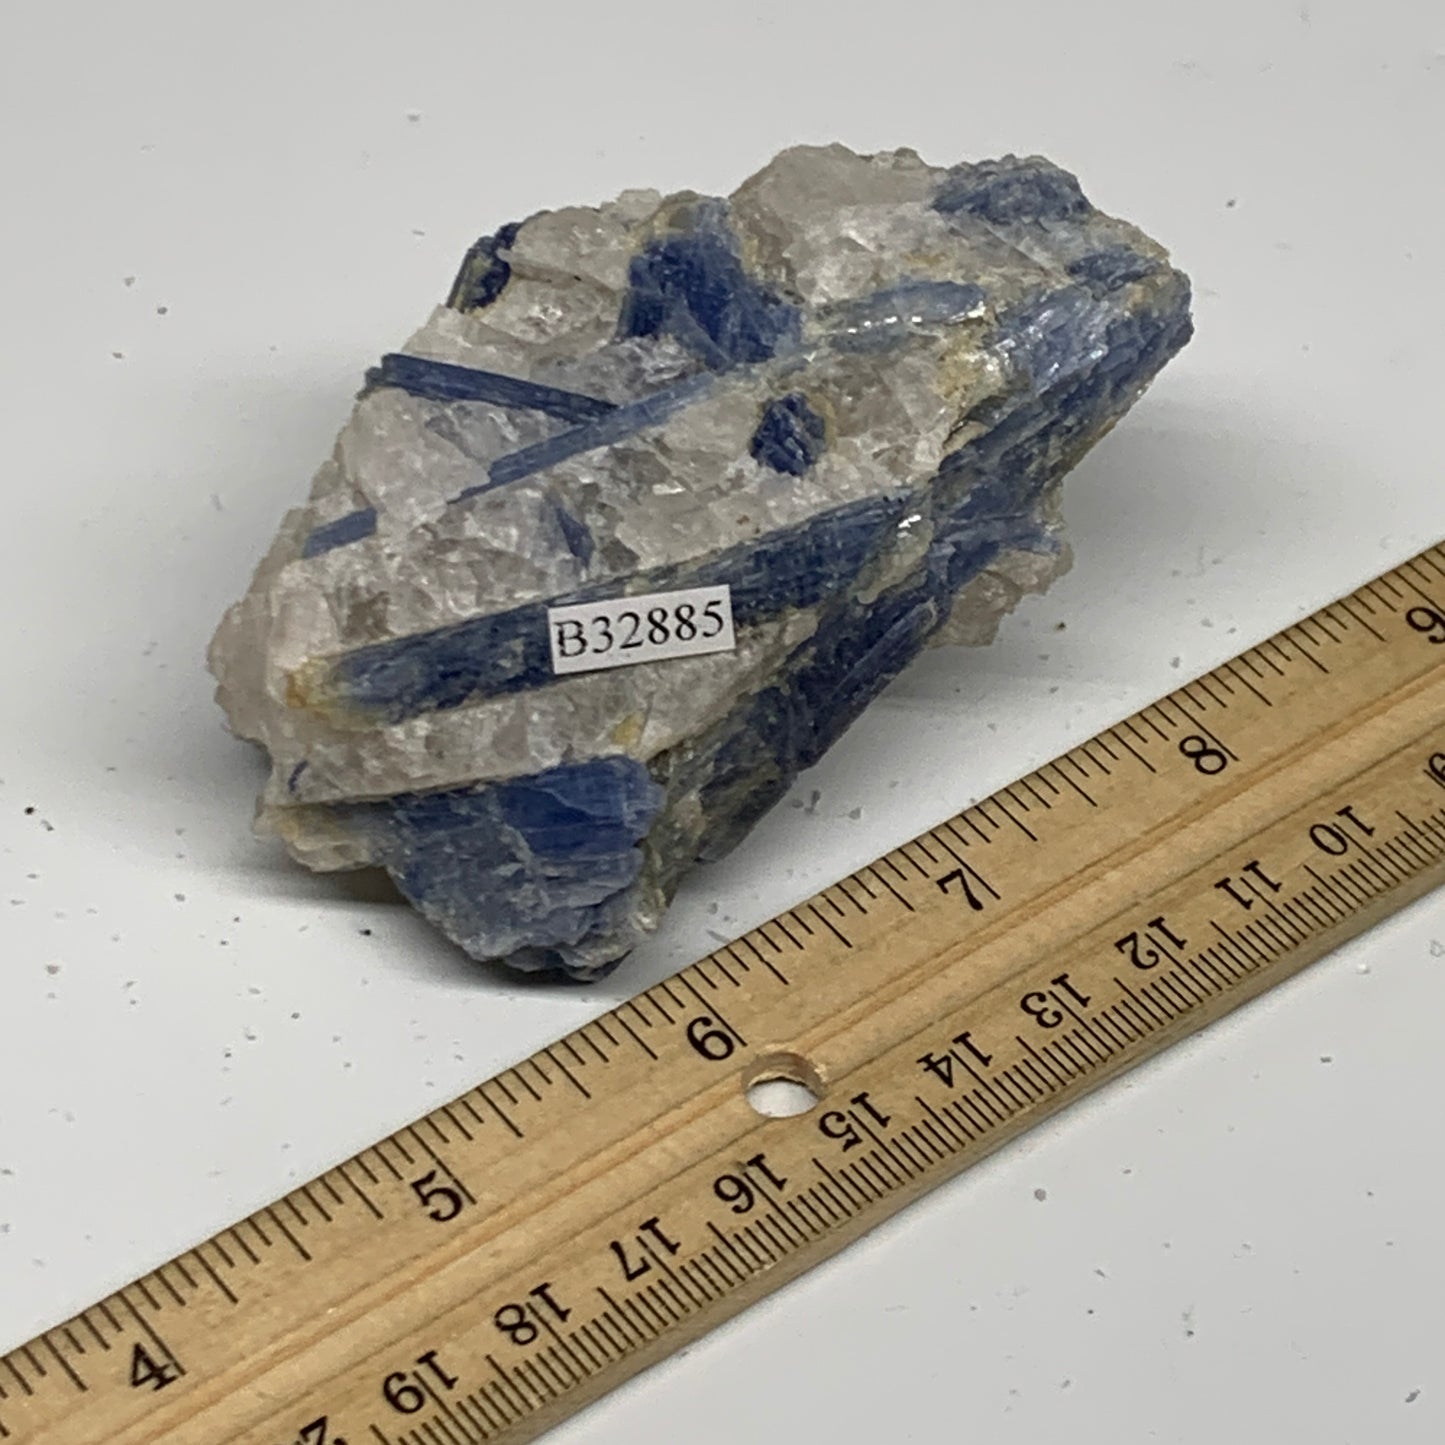 172.3g,3.3"x1.9"x1.3",Blue Kyanite Quartz  Mineral Specimen @Brazil, B32885